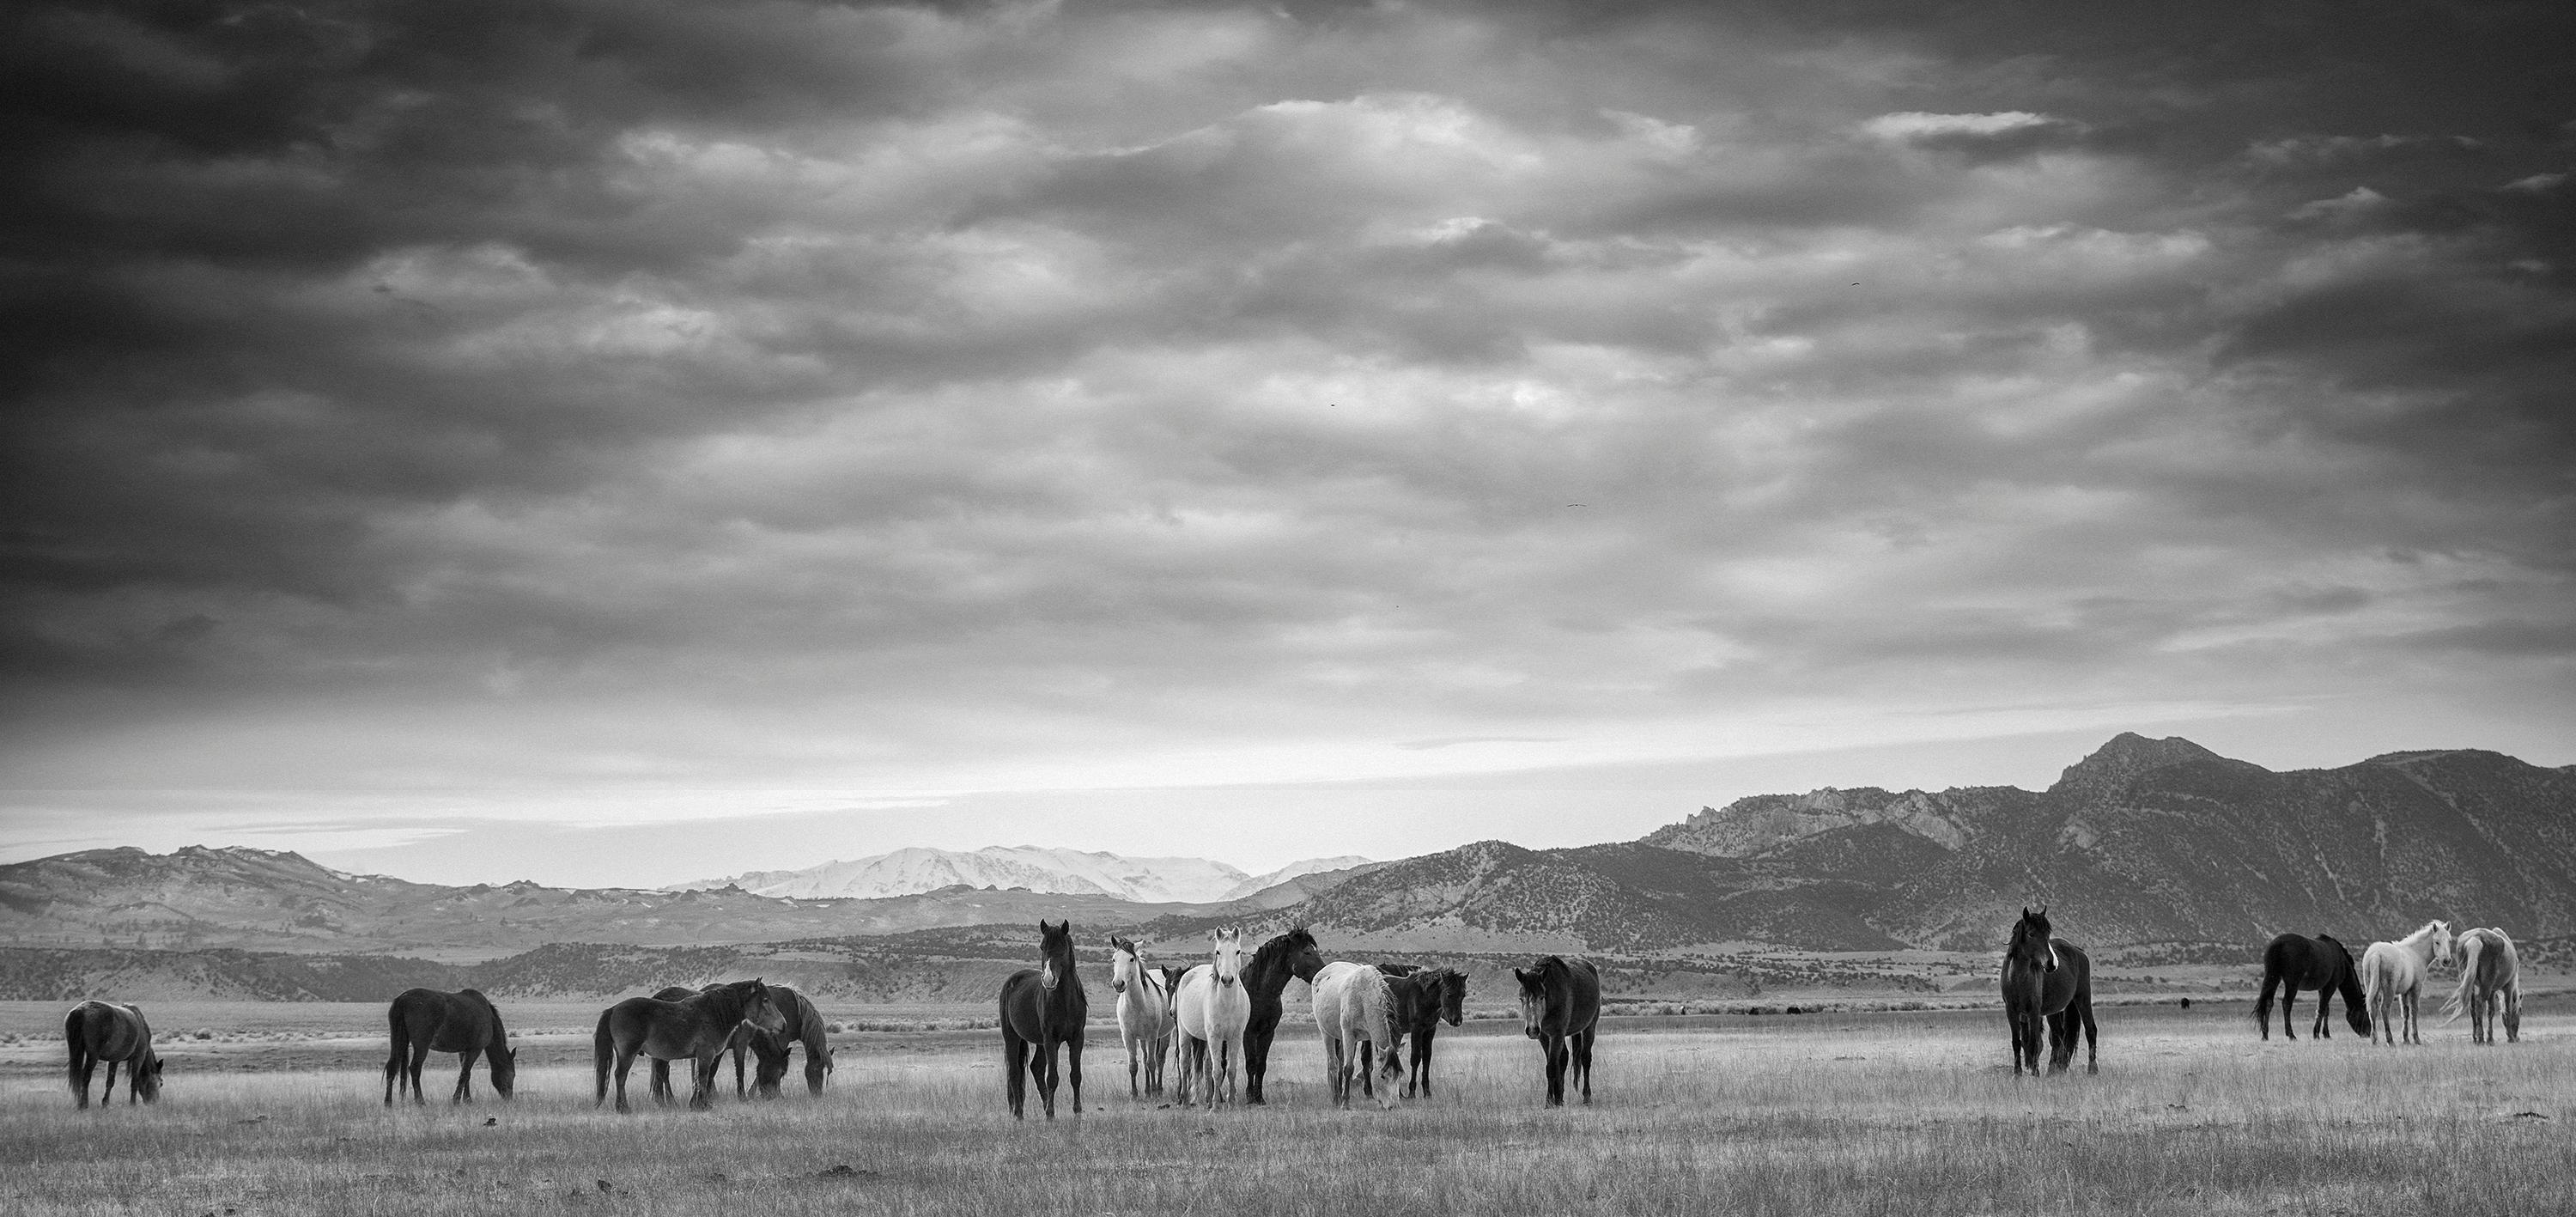 Shane Russeck Landscape Photograph -  "Gangs All Here" - 40x25 Wild Horse Photography Photograph Western Art Horses